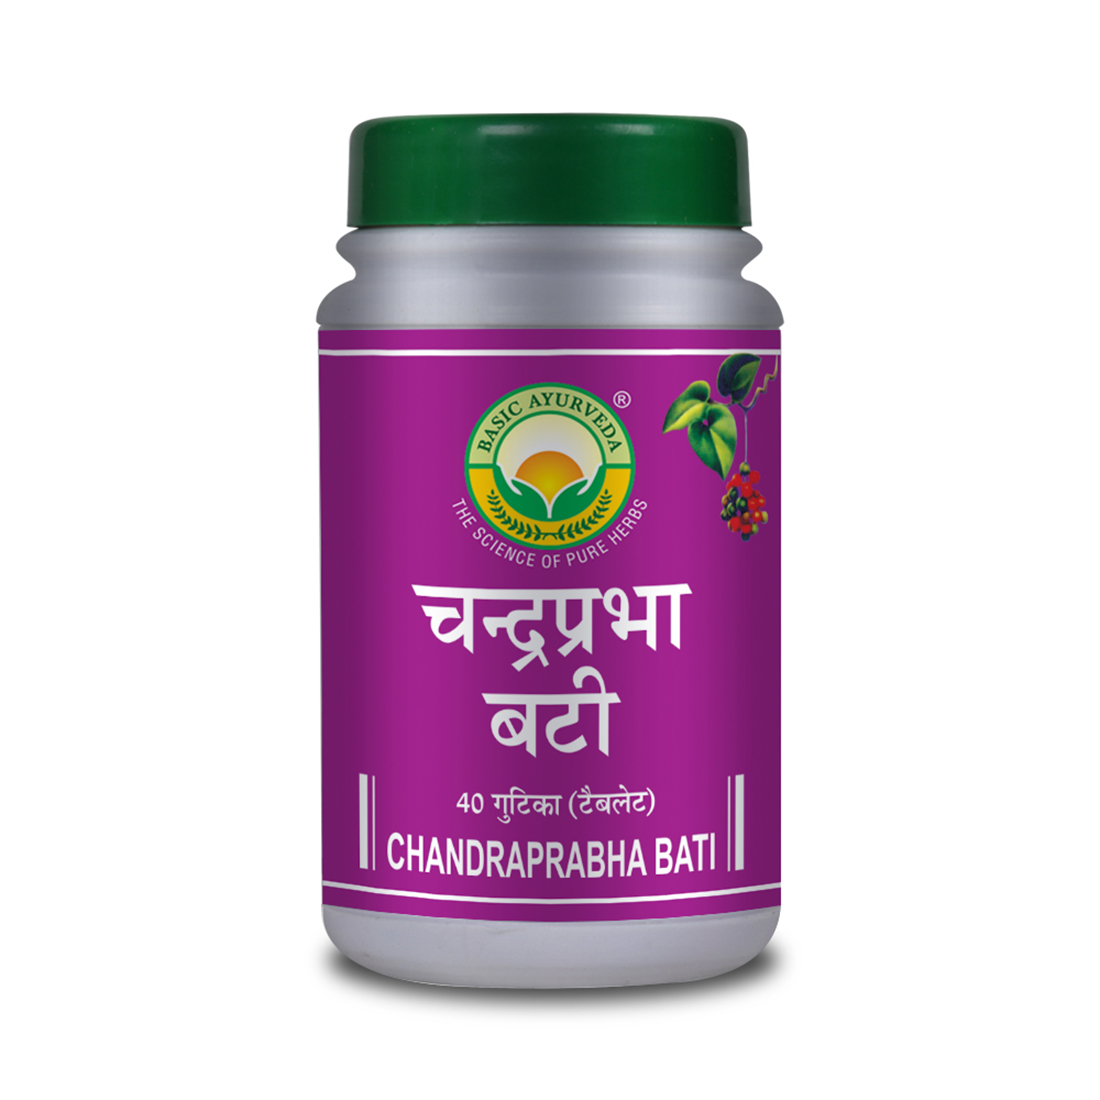 Chandraprabha Bati